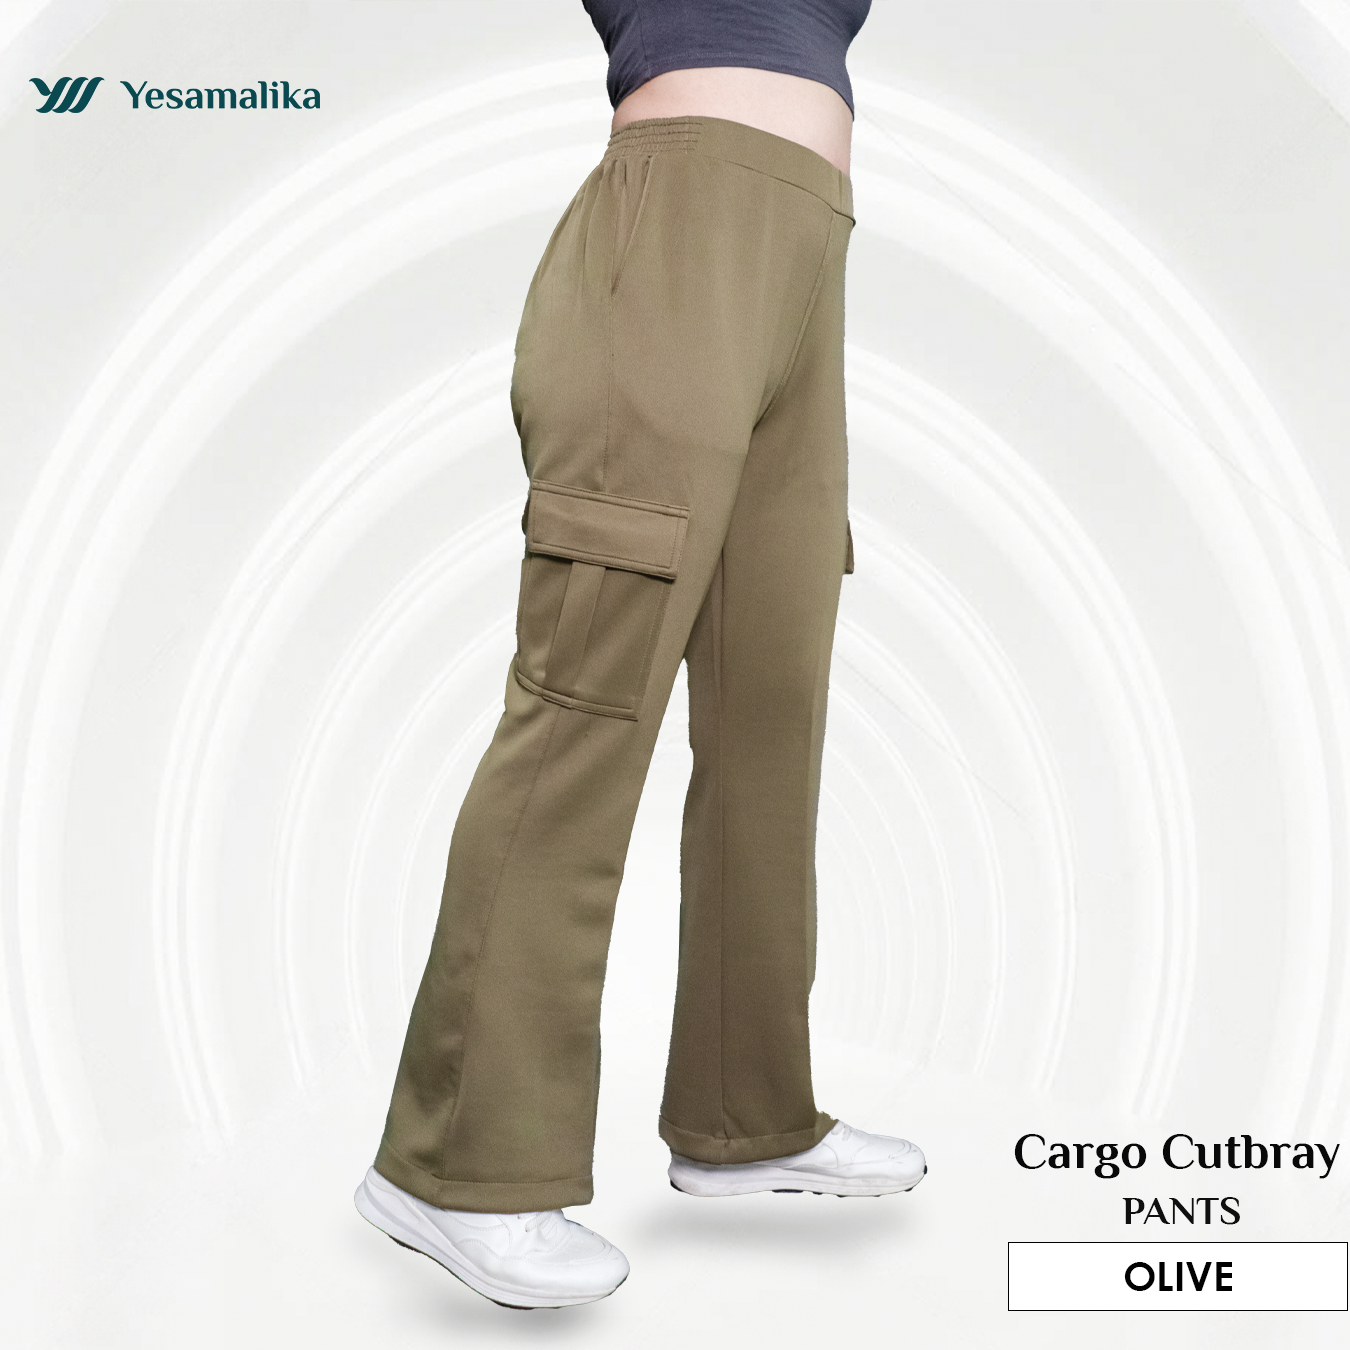 Cargo Cutbray Pants